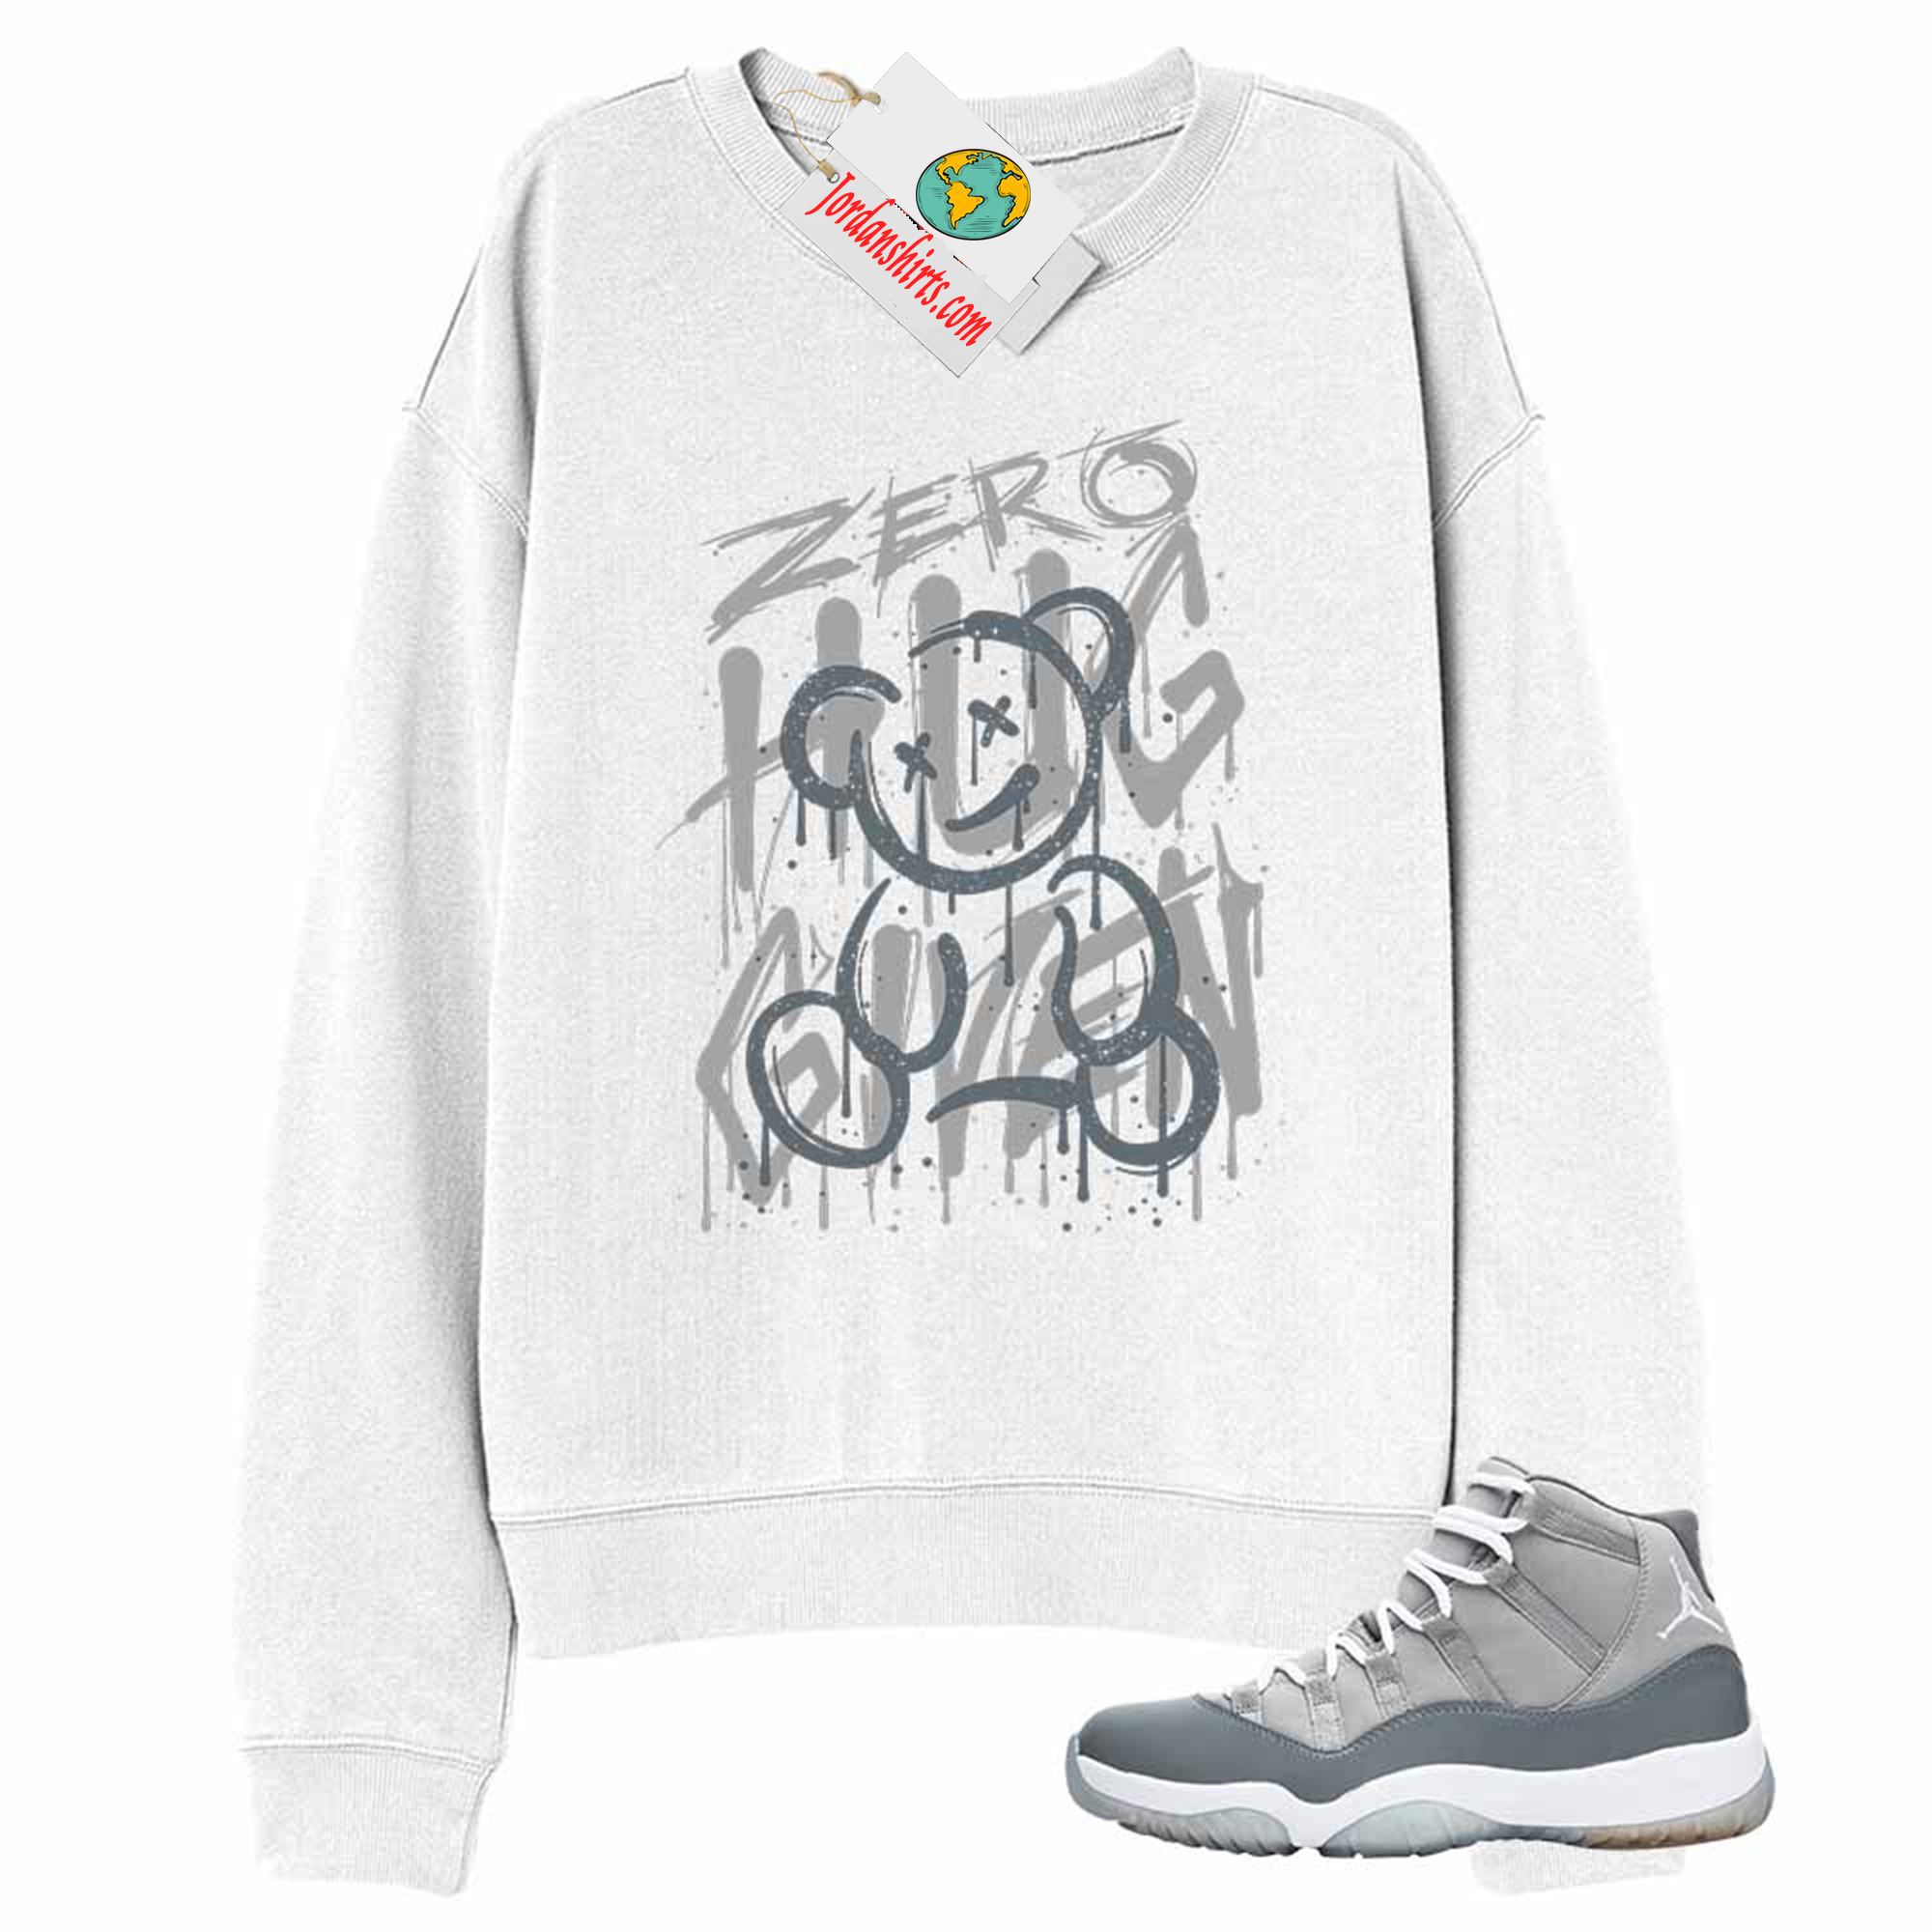 Jordan 11 Sweatshirt, Zero Hug Given White Sweatshirt Air Jordan 11 Cool Grey 11s Size Up To 5xl